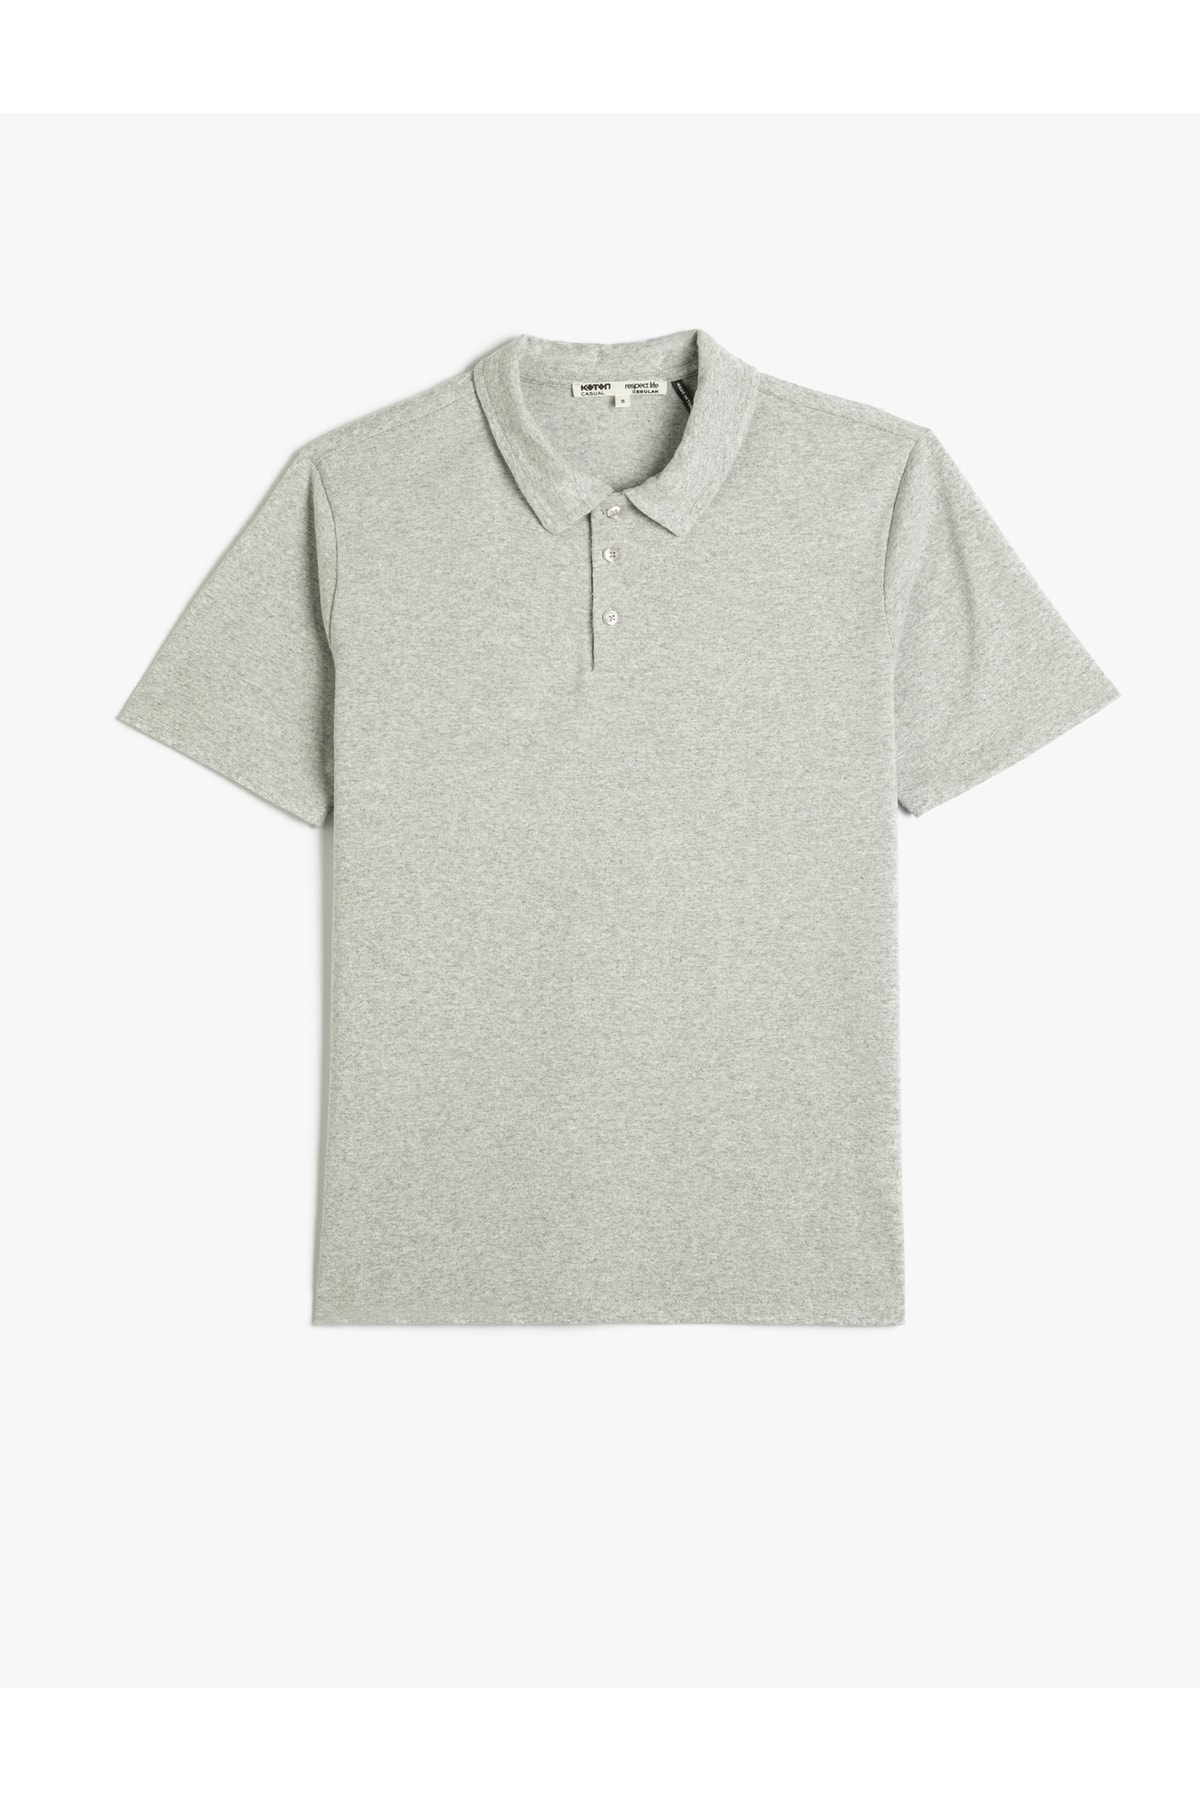 Базовая футболка-поло на пуговицах с коротким рукавом Koton, серый базовая футболка с воротником поло на пуговицах с коротким рукавом koton хаки